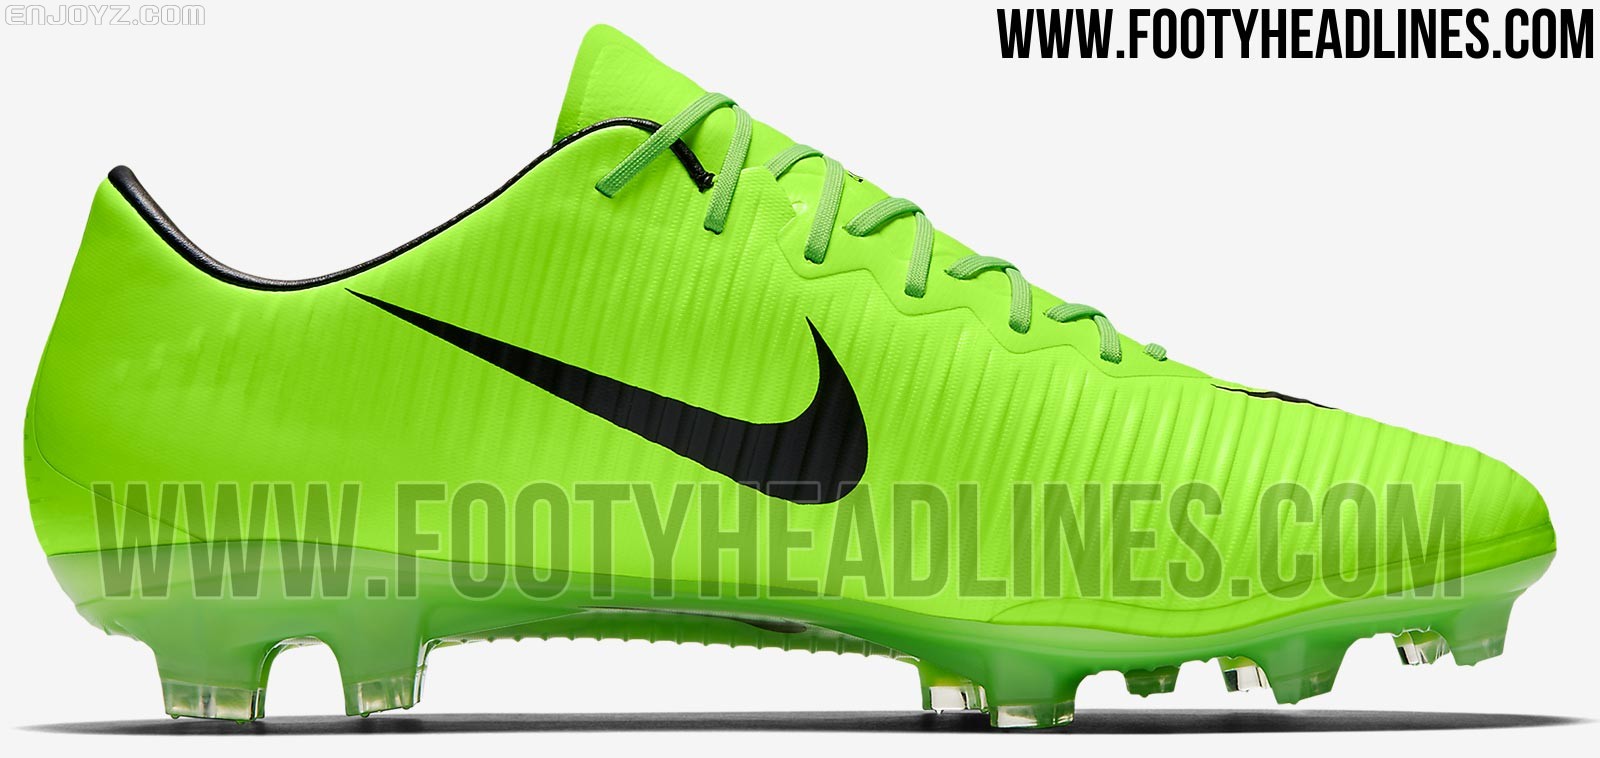 Nike Mercurial Vapor XII 12 Pro TF Soccer Turf Shoes eBay